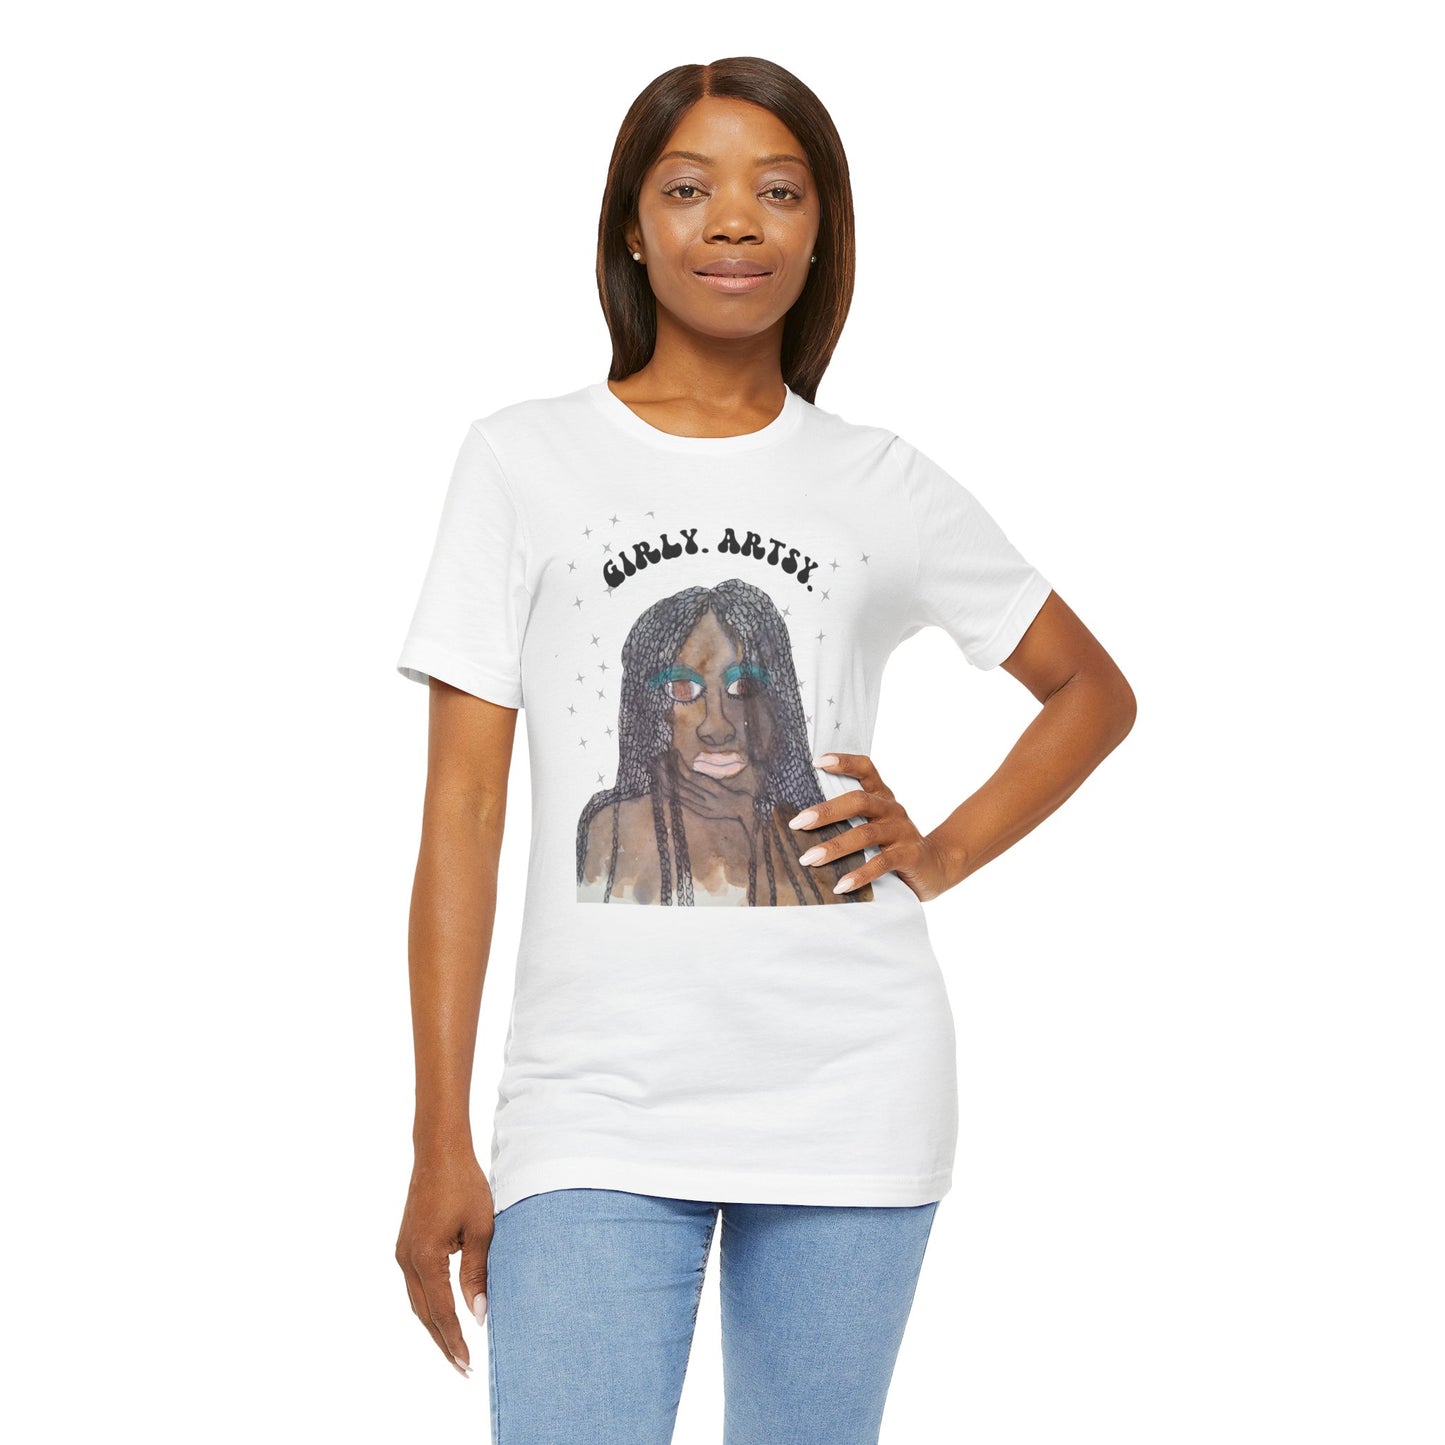 GIRLY. ARTSY. #1, Hand Painted Graphic T-shirt, Women's T-shirt, Black Art Graphic, Black Woman Graphic, Hand-painted Graphic, Retro, Gift for Her, Urban Fashion, Urban Streetstyle, Unisex Jersey Short Sleeve Tee